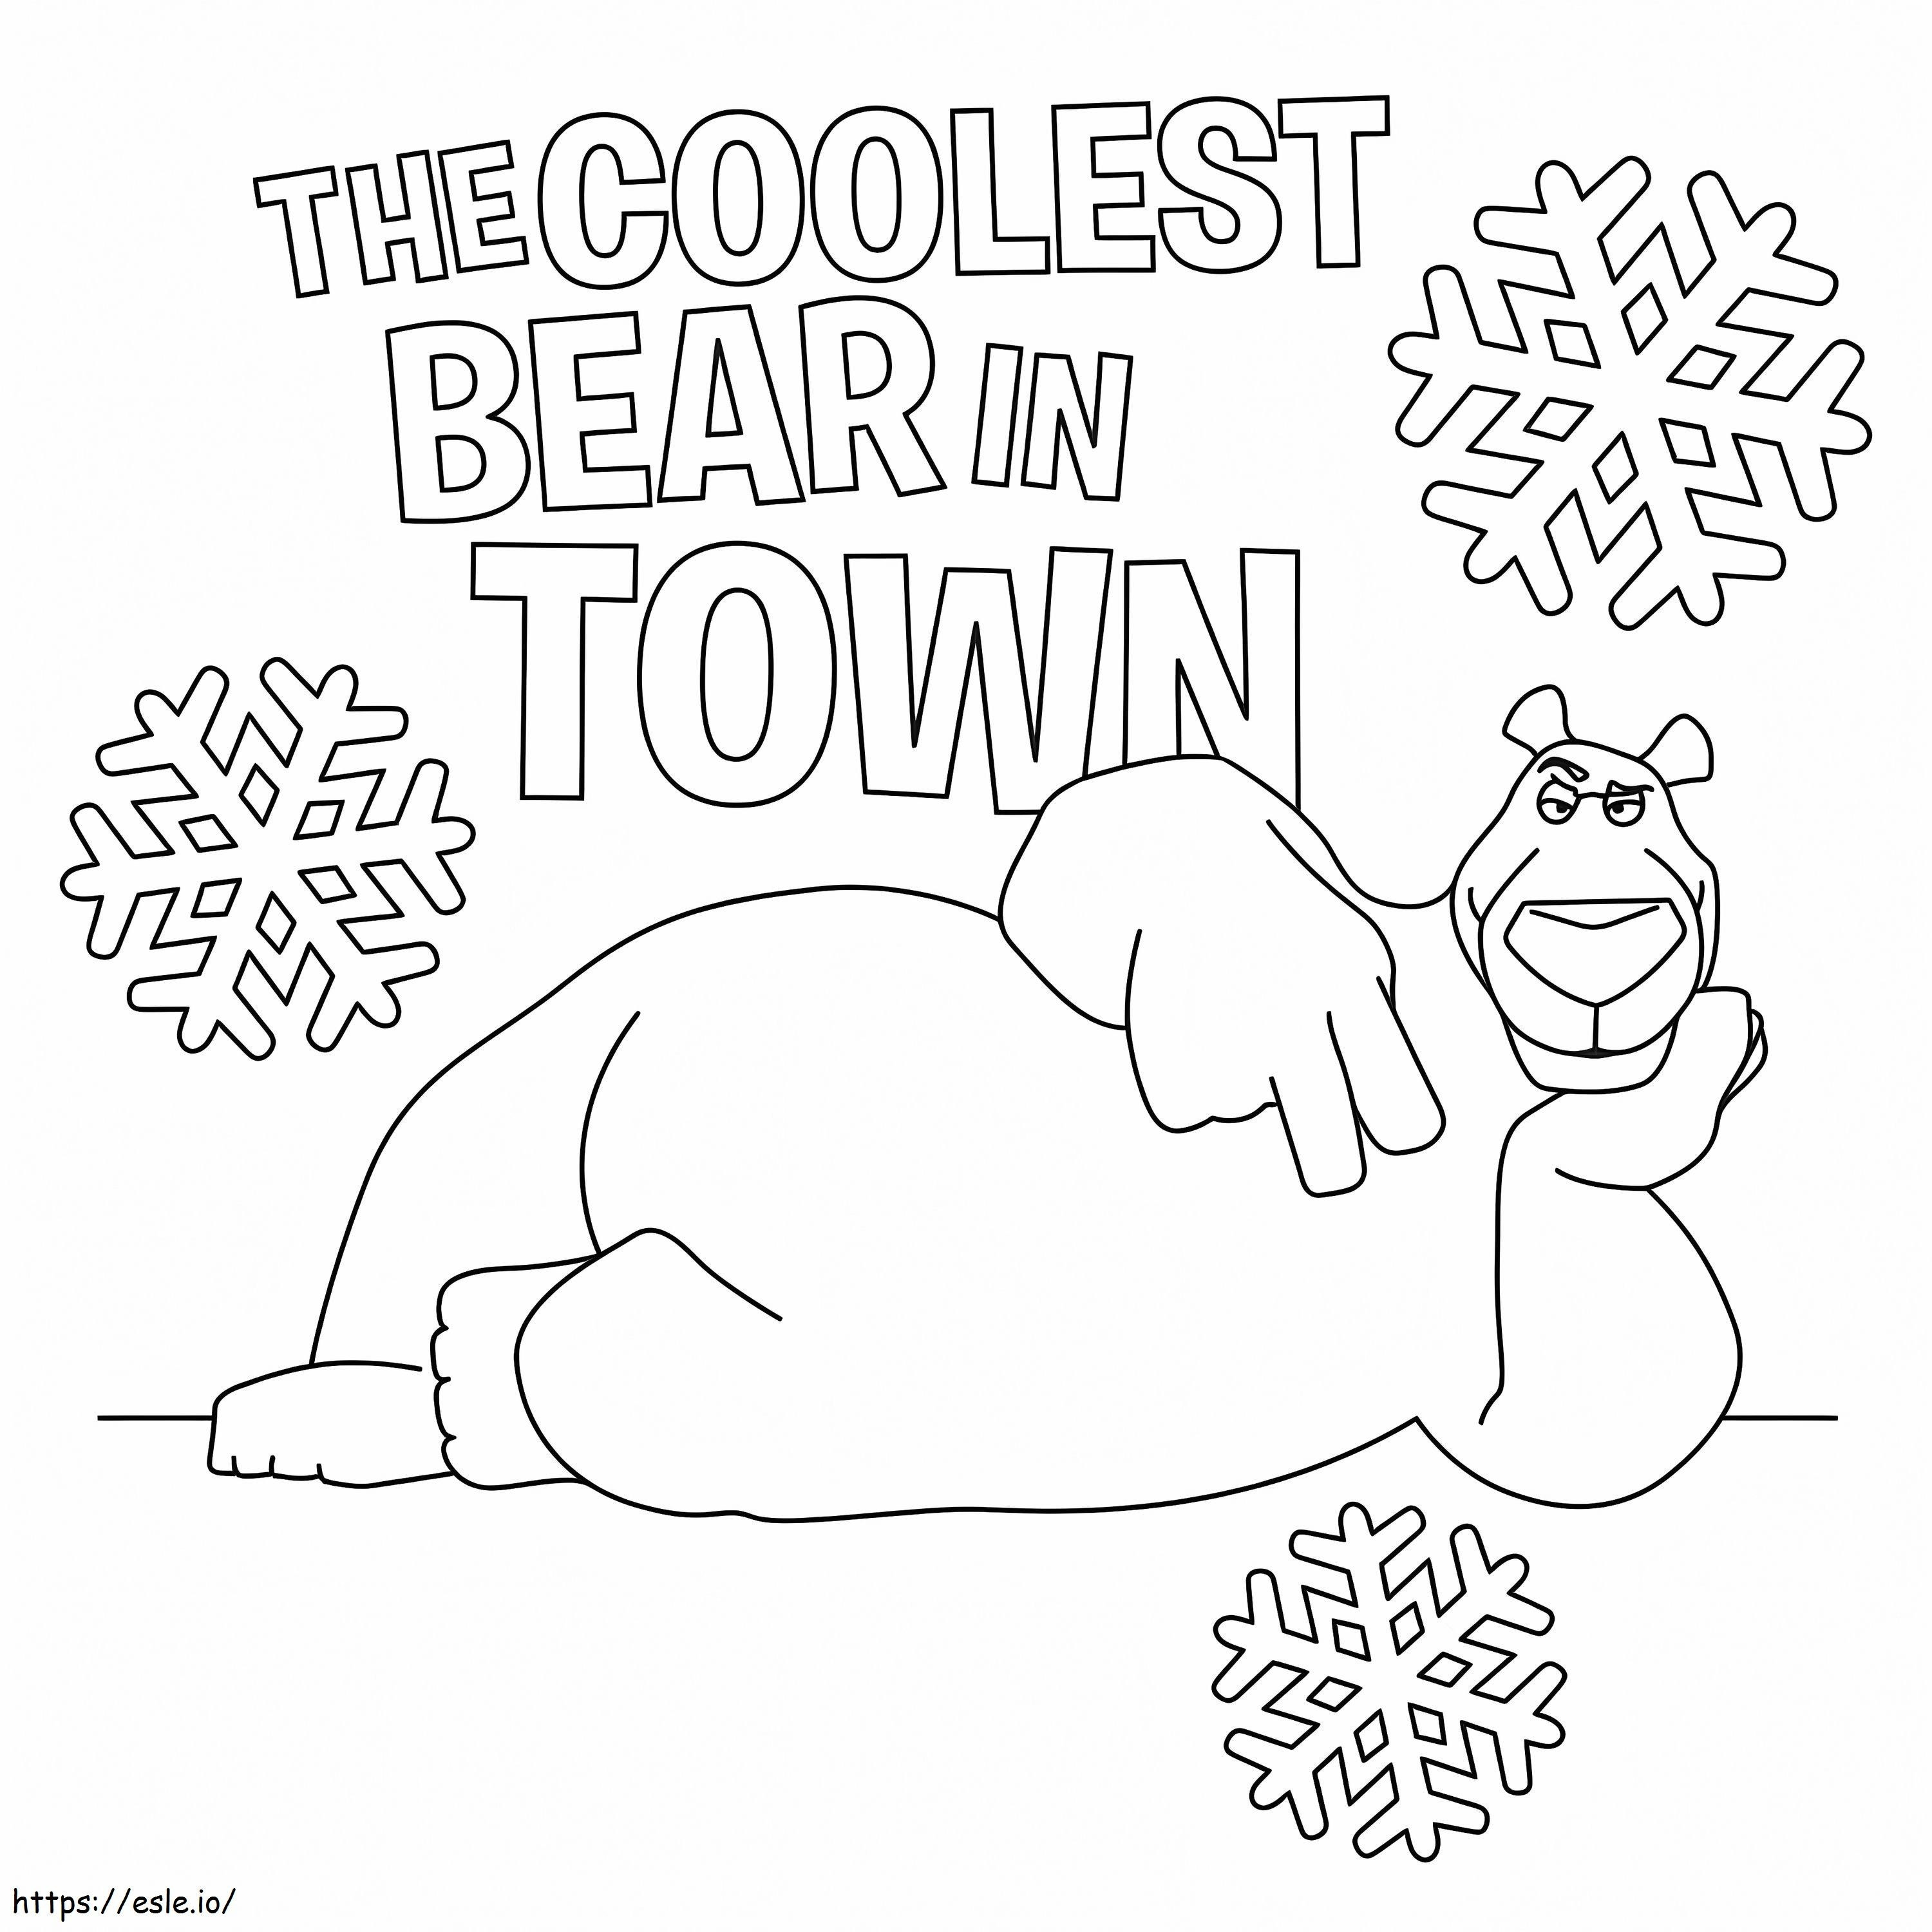 Polar Bear Norm coloring page